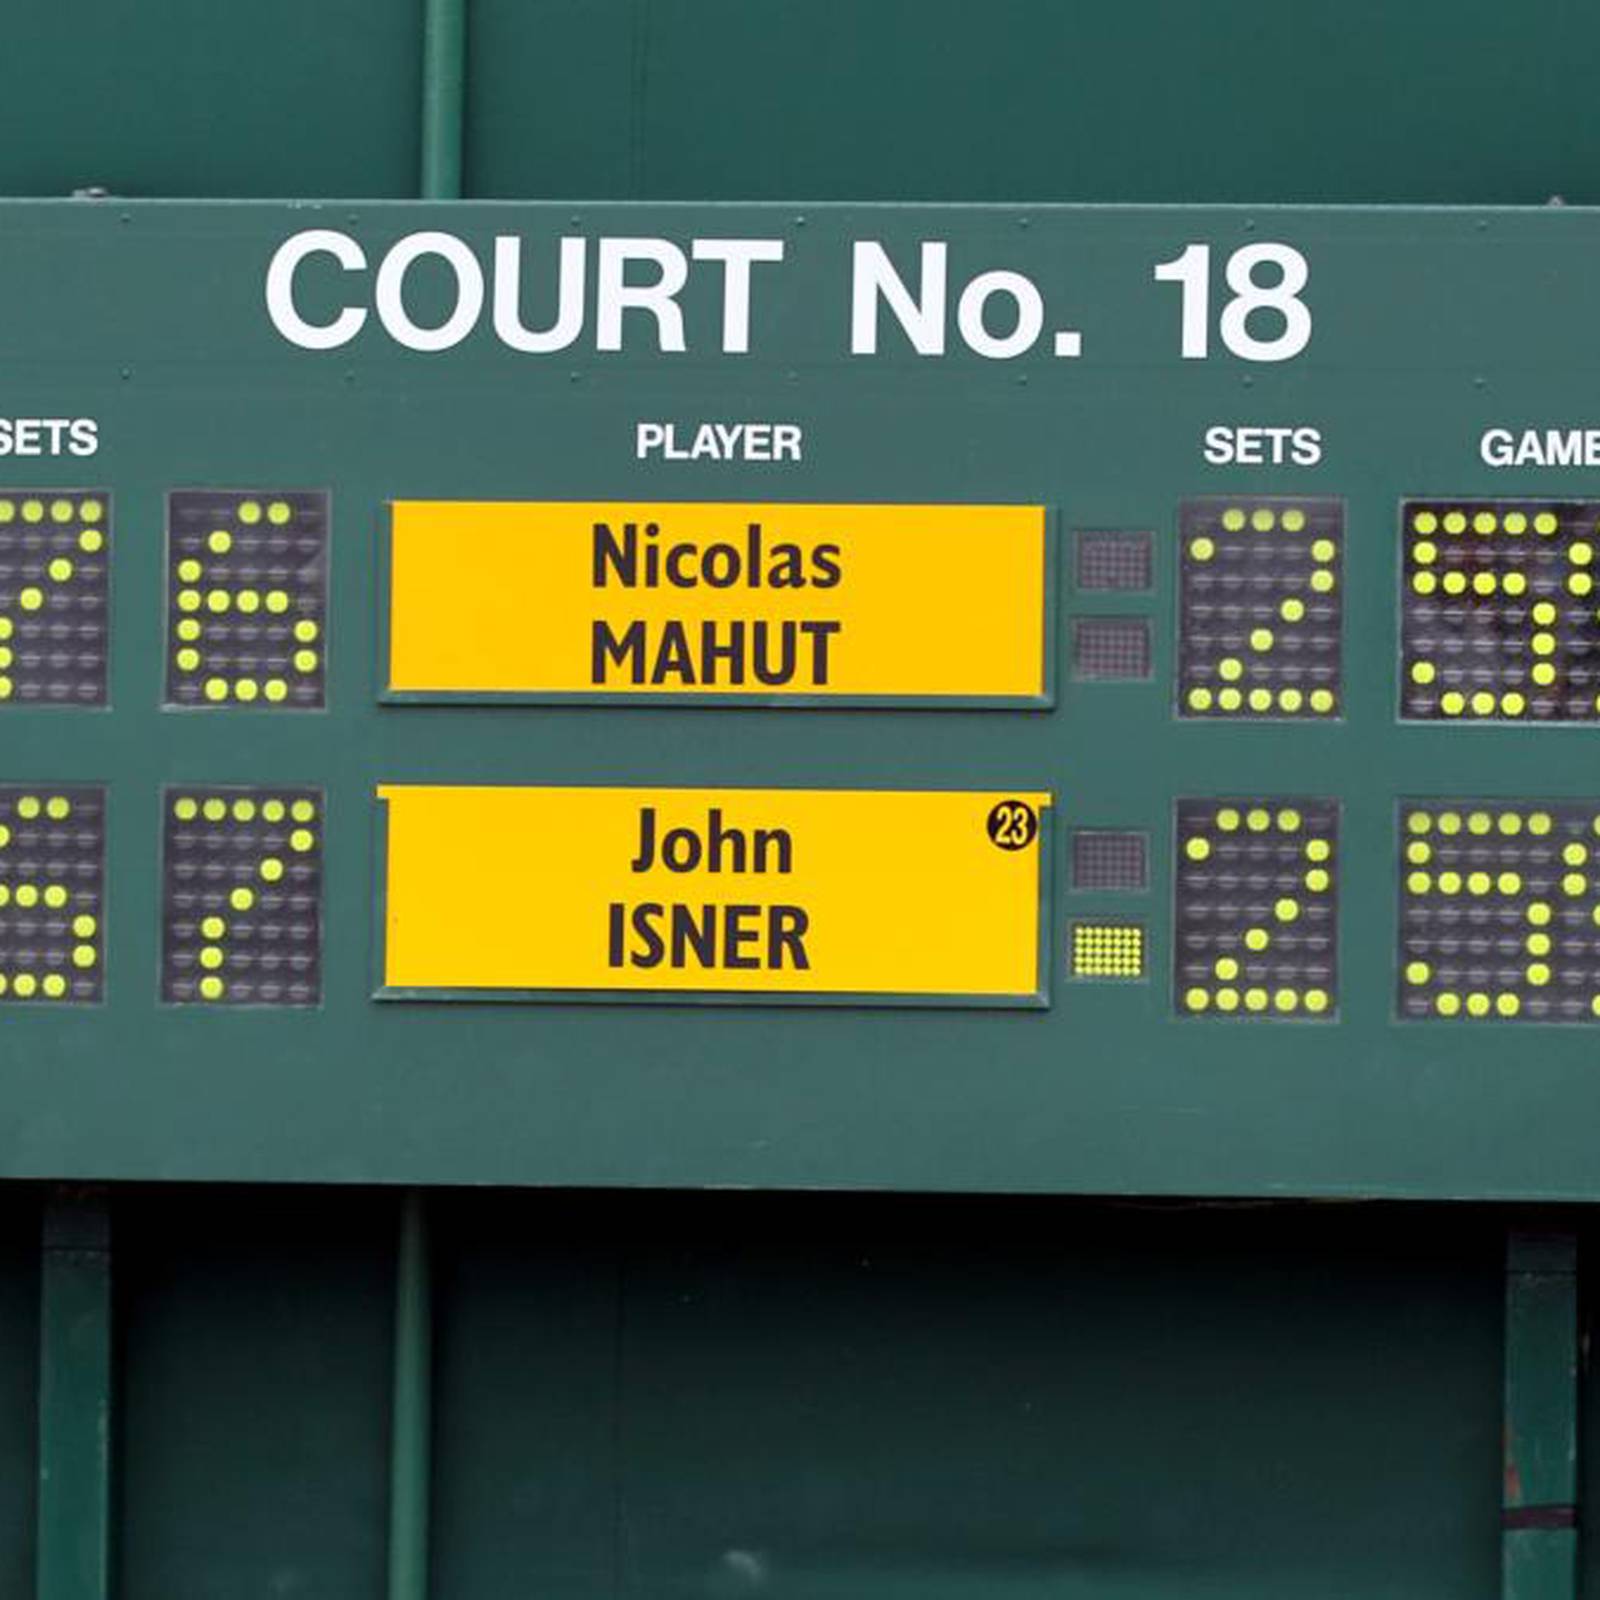 Slams to trial 10-point tiebreak in final set starting with Roland Garros